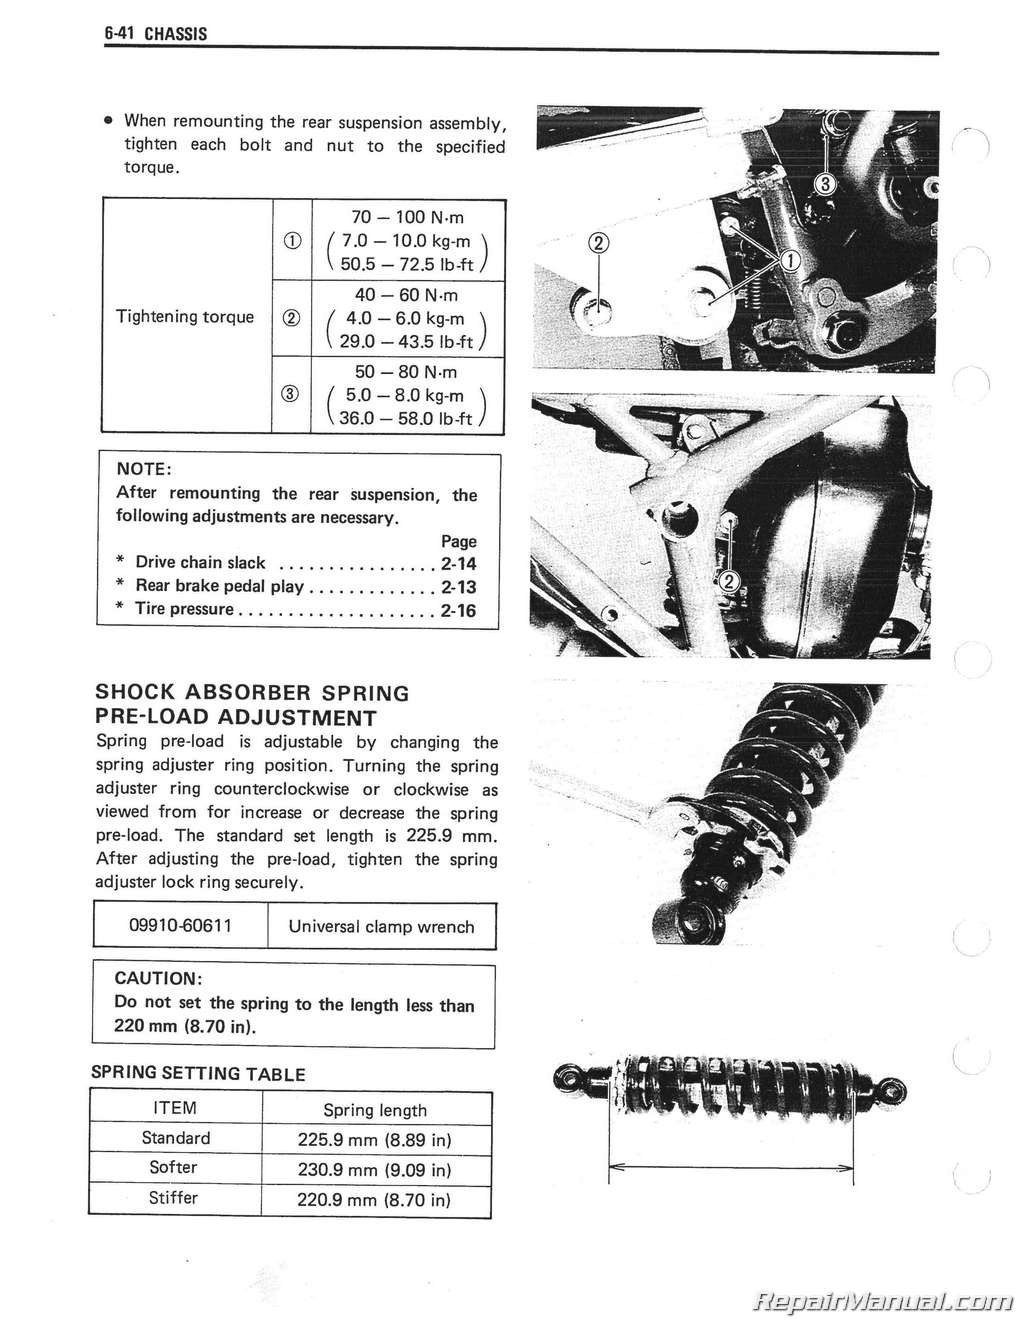 1986 1987 1988 Suzuki DR125 SP125 Motorcycle Service Manual | eBay